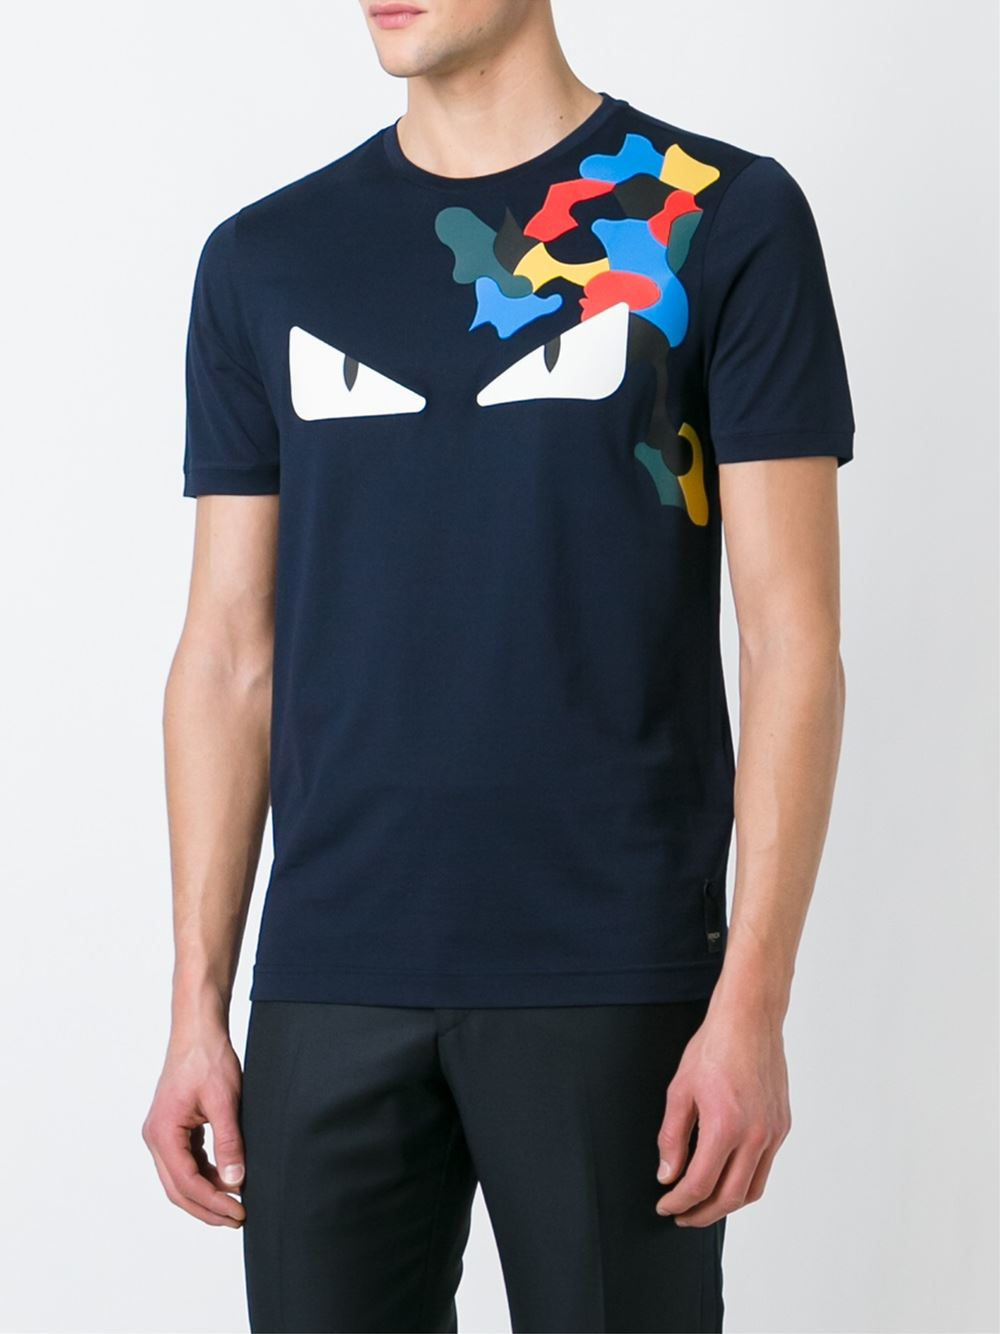 Fendi T Shirt Men The Art Of Mike Mignola - fendi shirt roblox the art of mike mignola